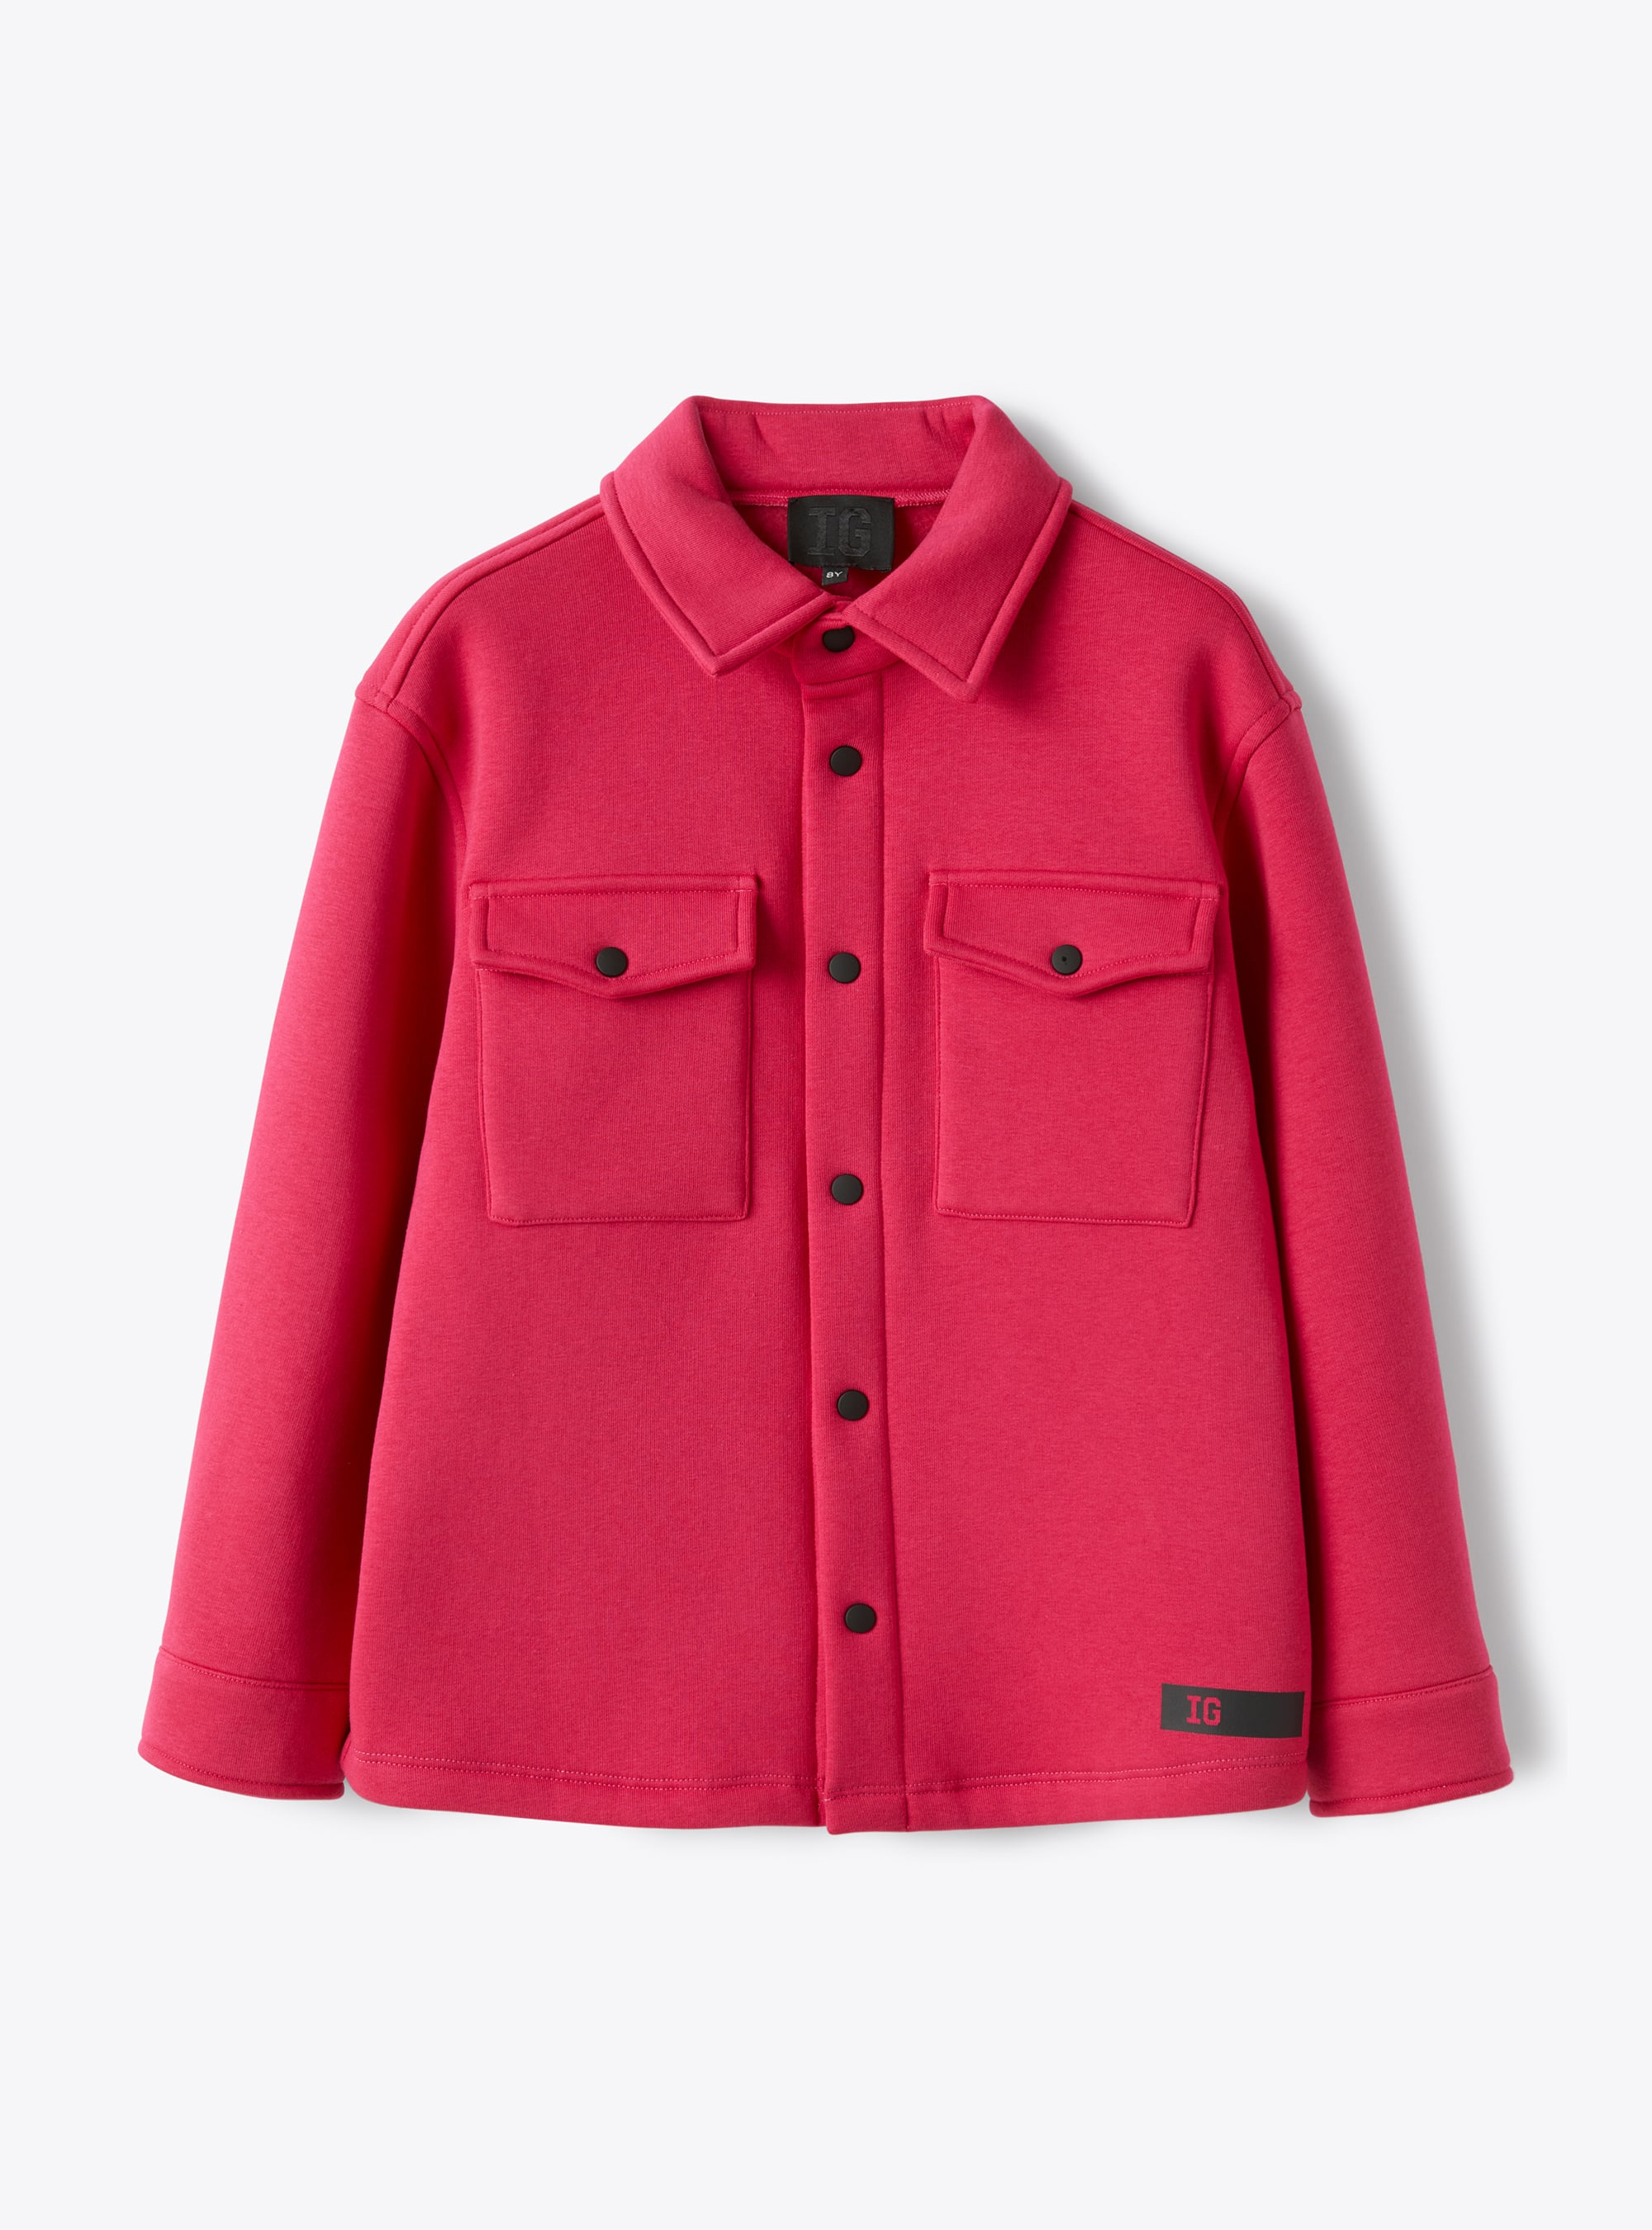 Shirt jacket in fuchsia-pink fleece - Jackets - Il Gufo